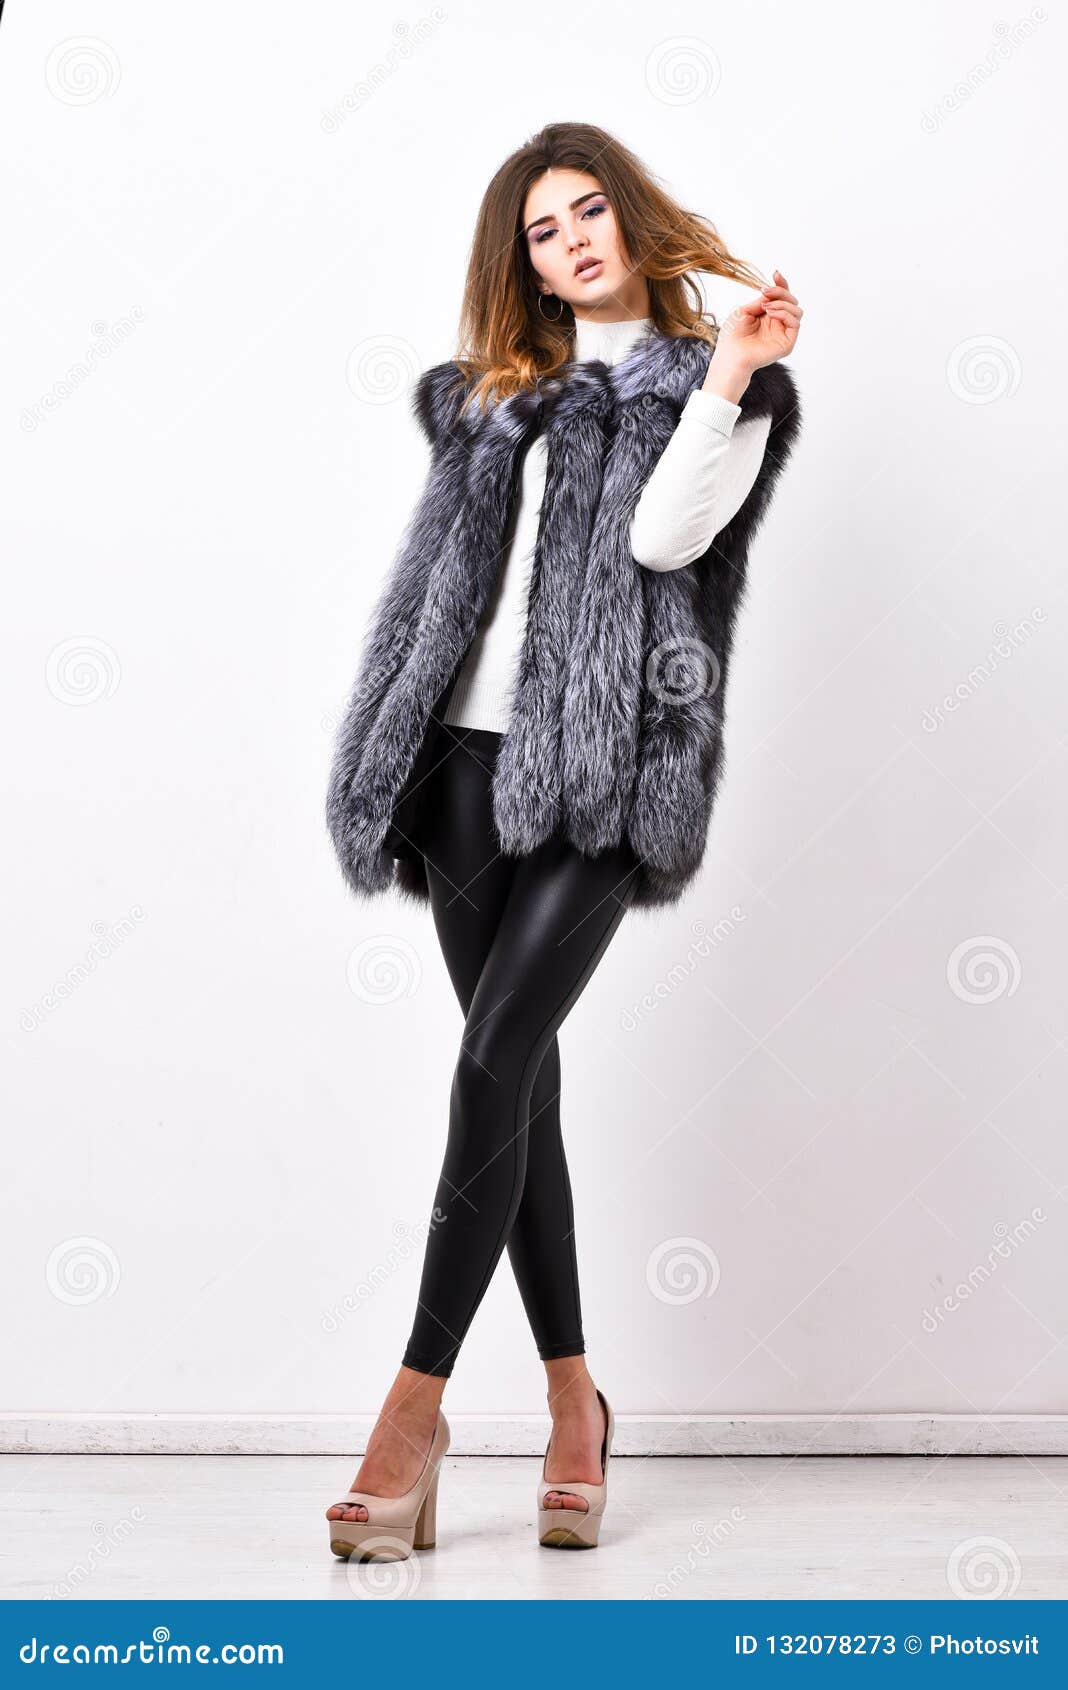 boutiques selling fur. woman makeup face wear fur vest white background. luxury fur accessory clothes. fashion trend